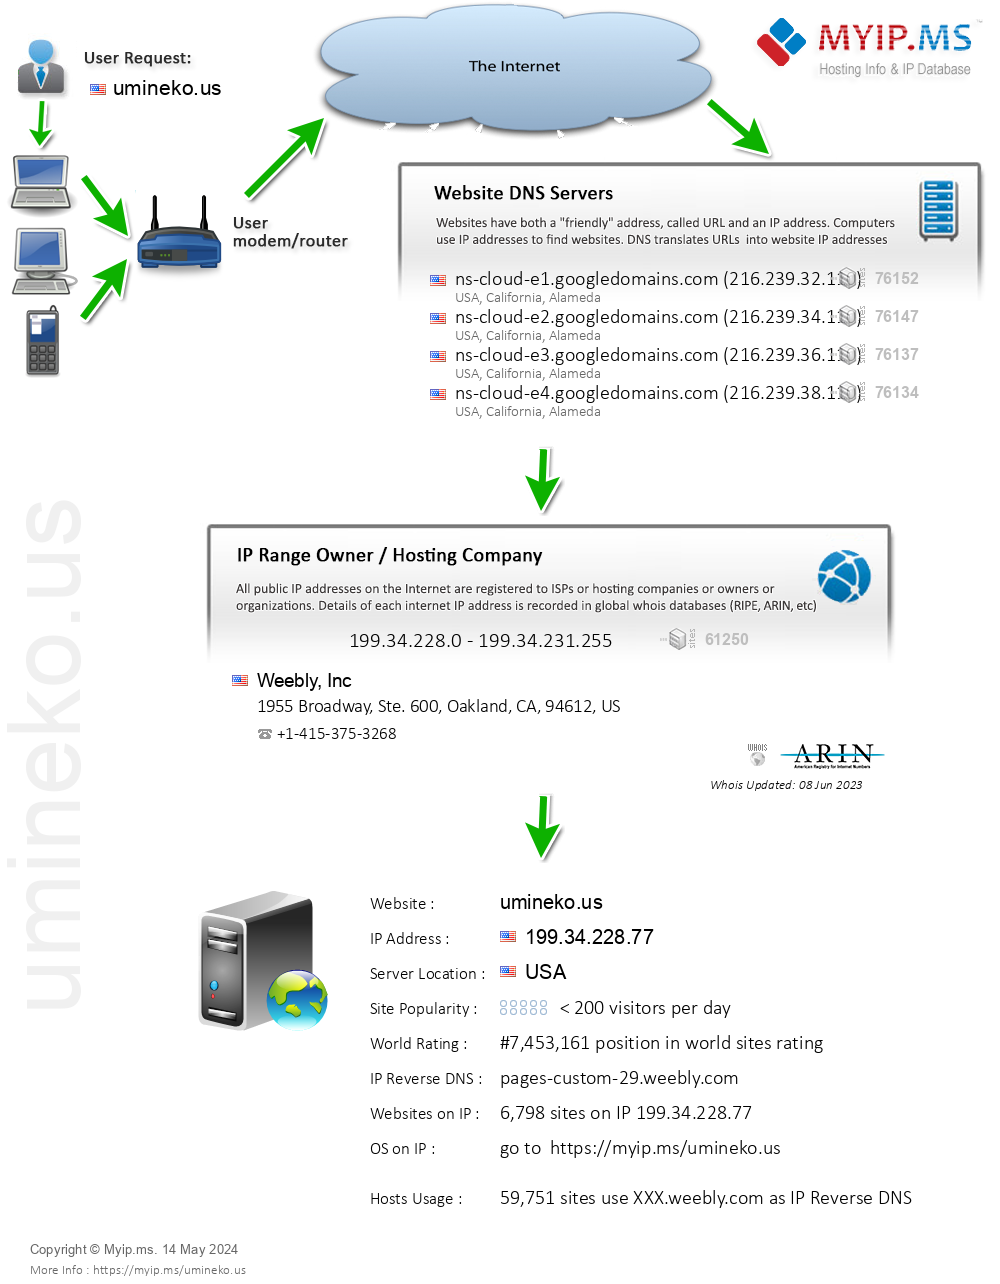 Umineko.us - Website Hosting Visual IP Diagram